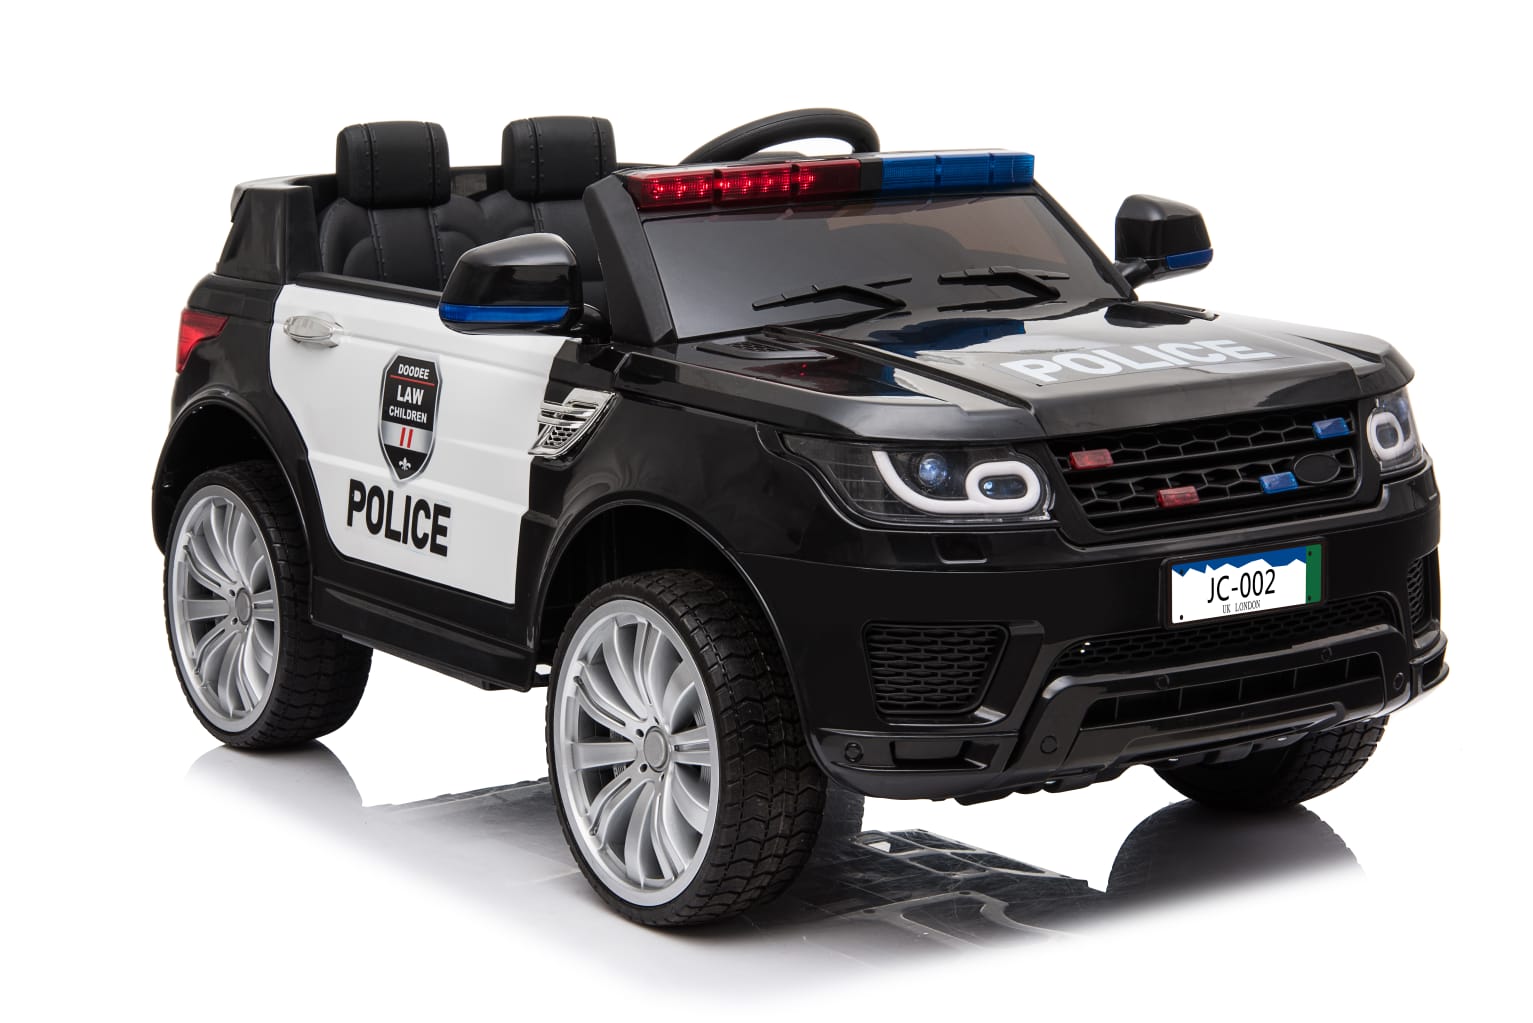 12V7AH Akku,2 Motoren Kinder Elektro Auto Kinderauto Polizei Design 2,4Ghz,MP 